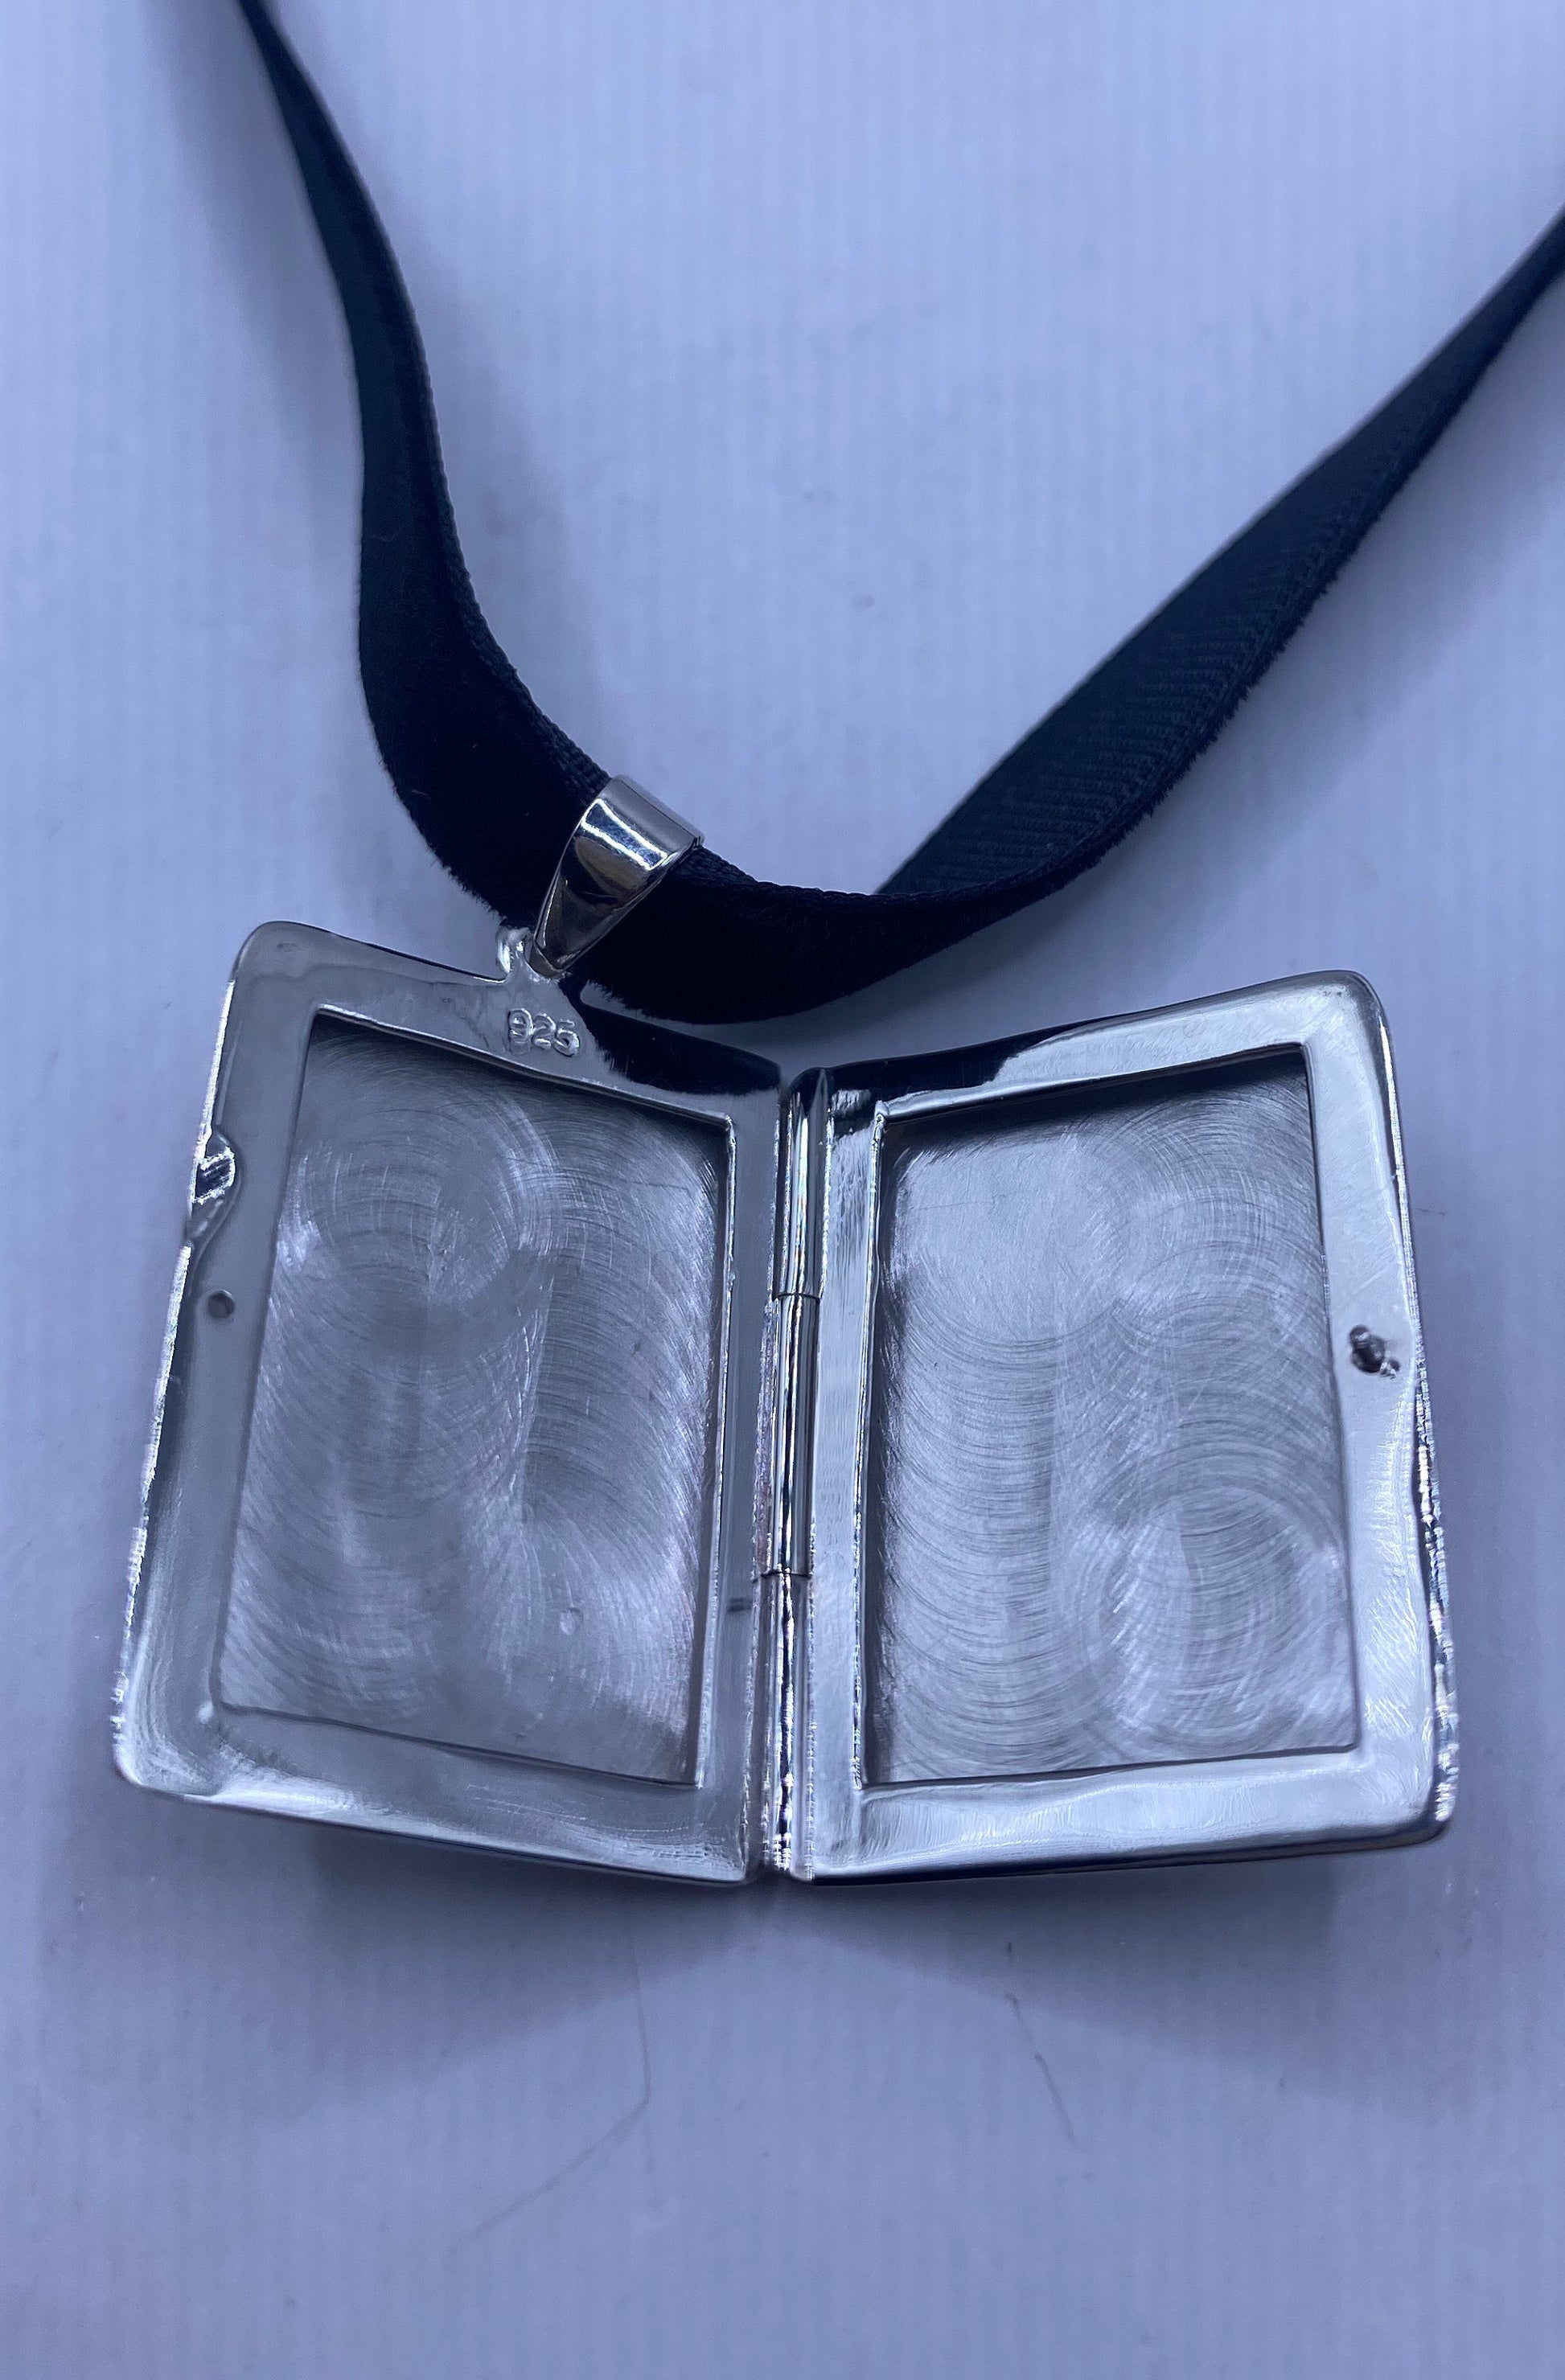 Vintage Silver Locket | Deco Choker 925 Sterling Silver Necklace